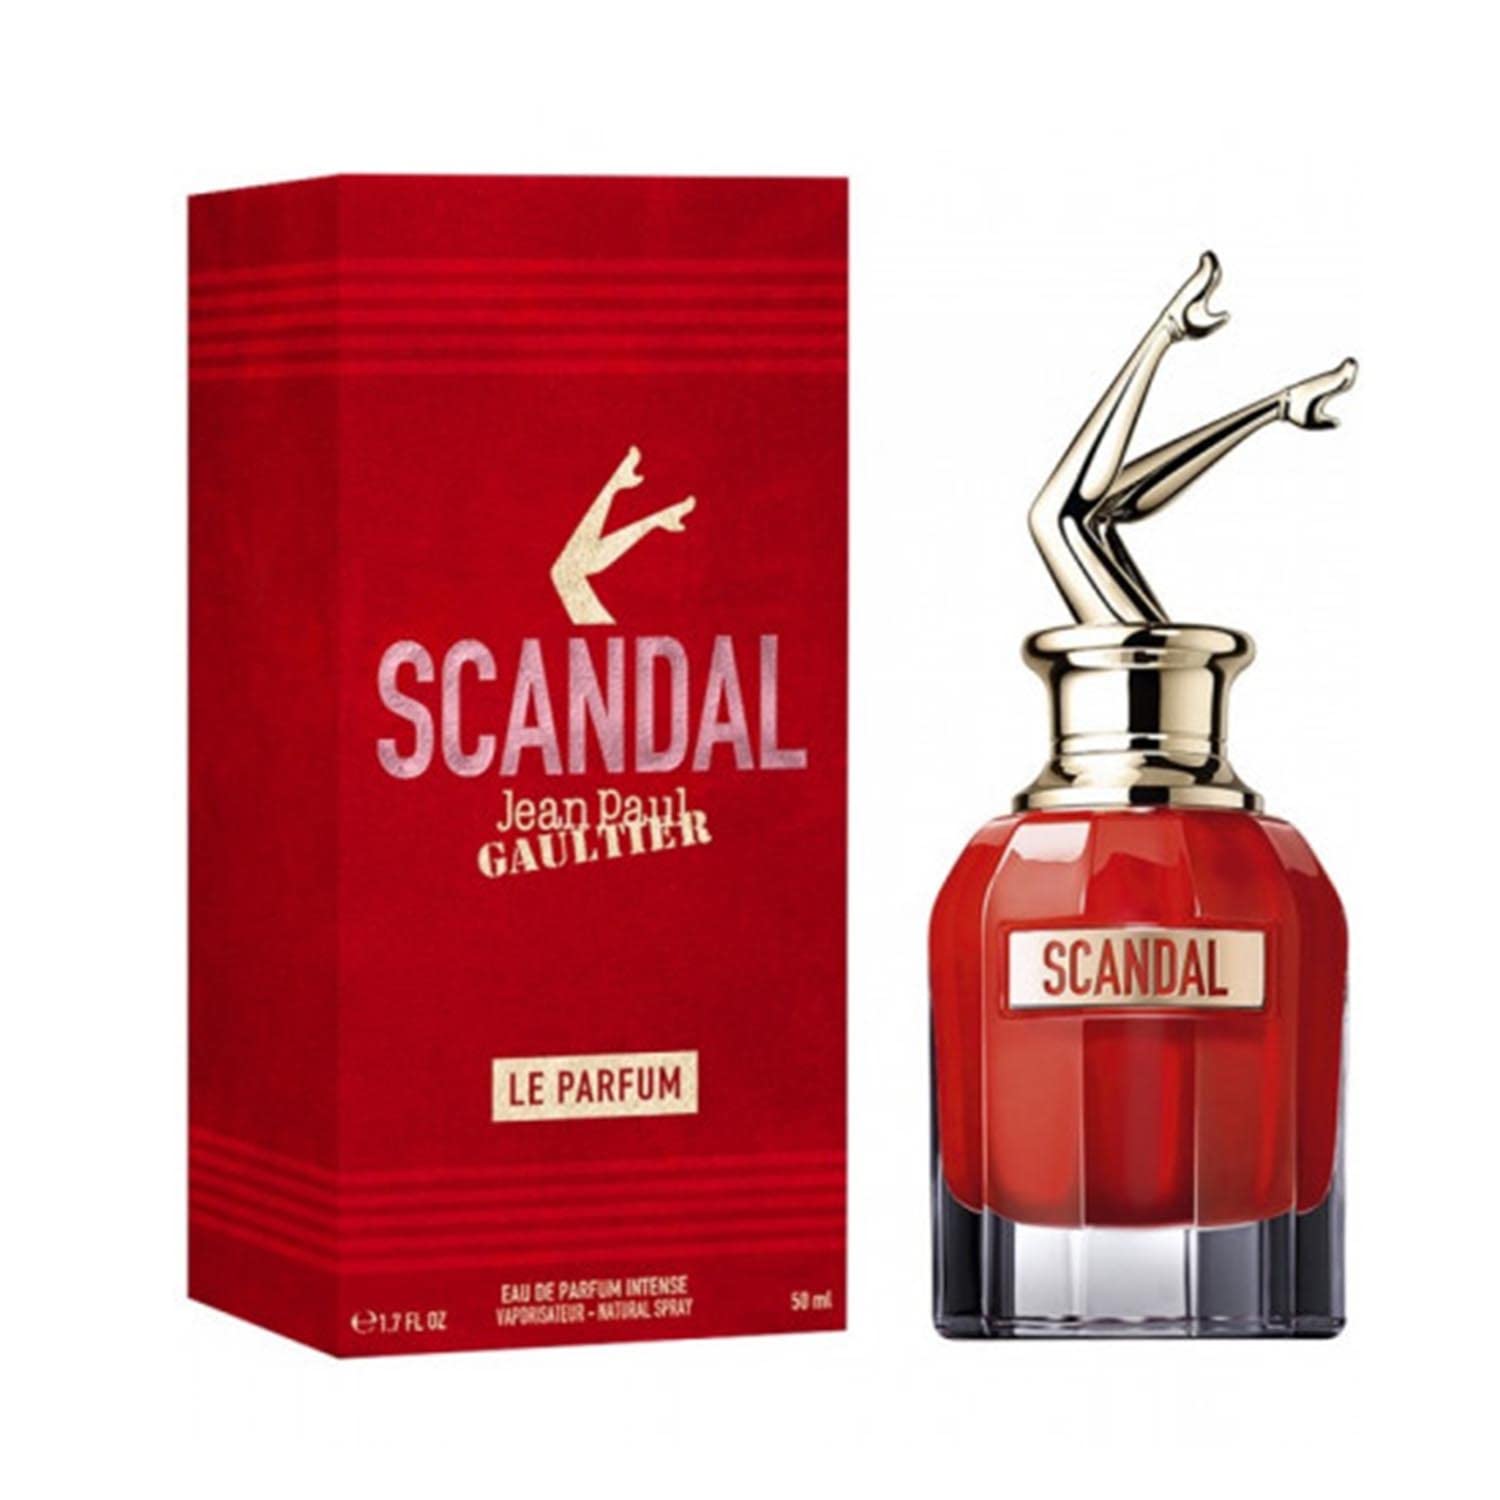 Jean Paul Gaultier Scandal Le Parfum EDP Intense Spray Women 1.7 oz